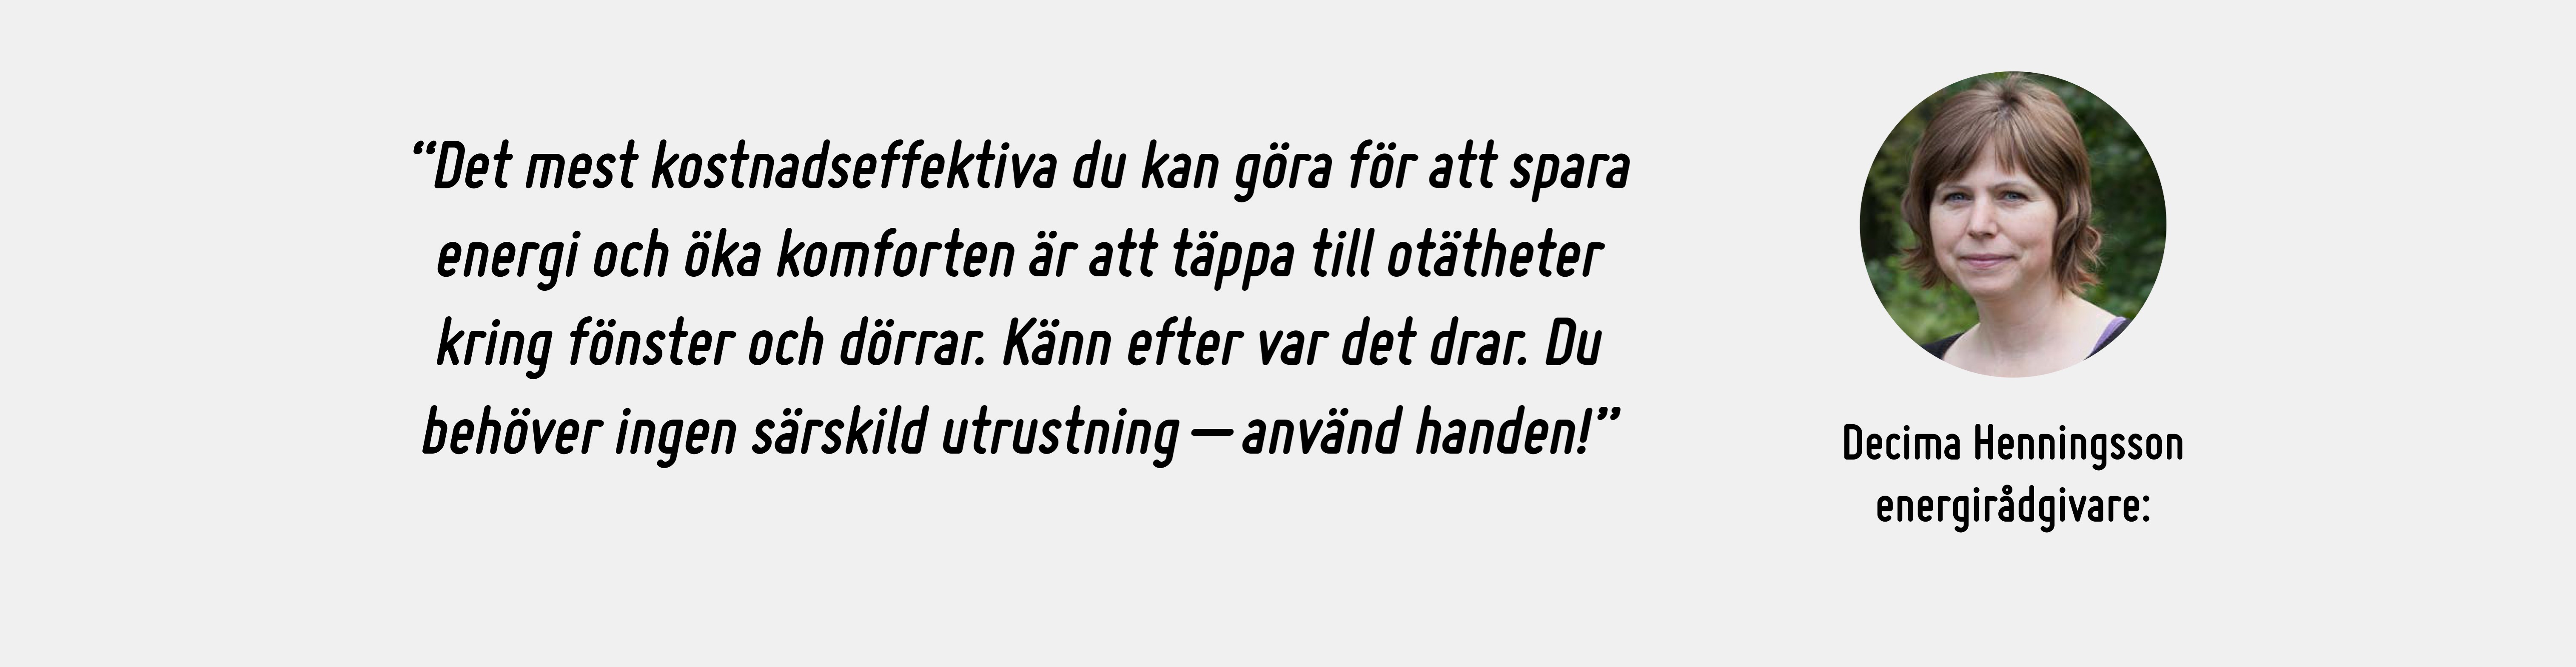 Decima Henningsson